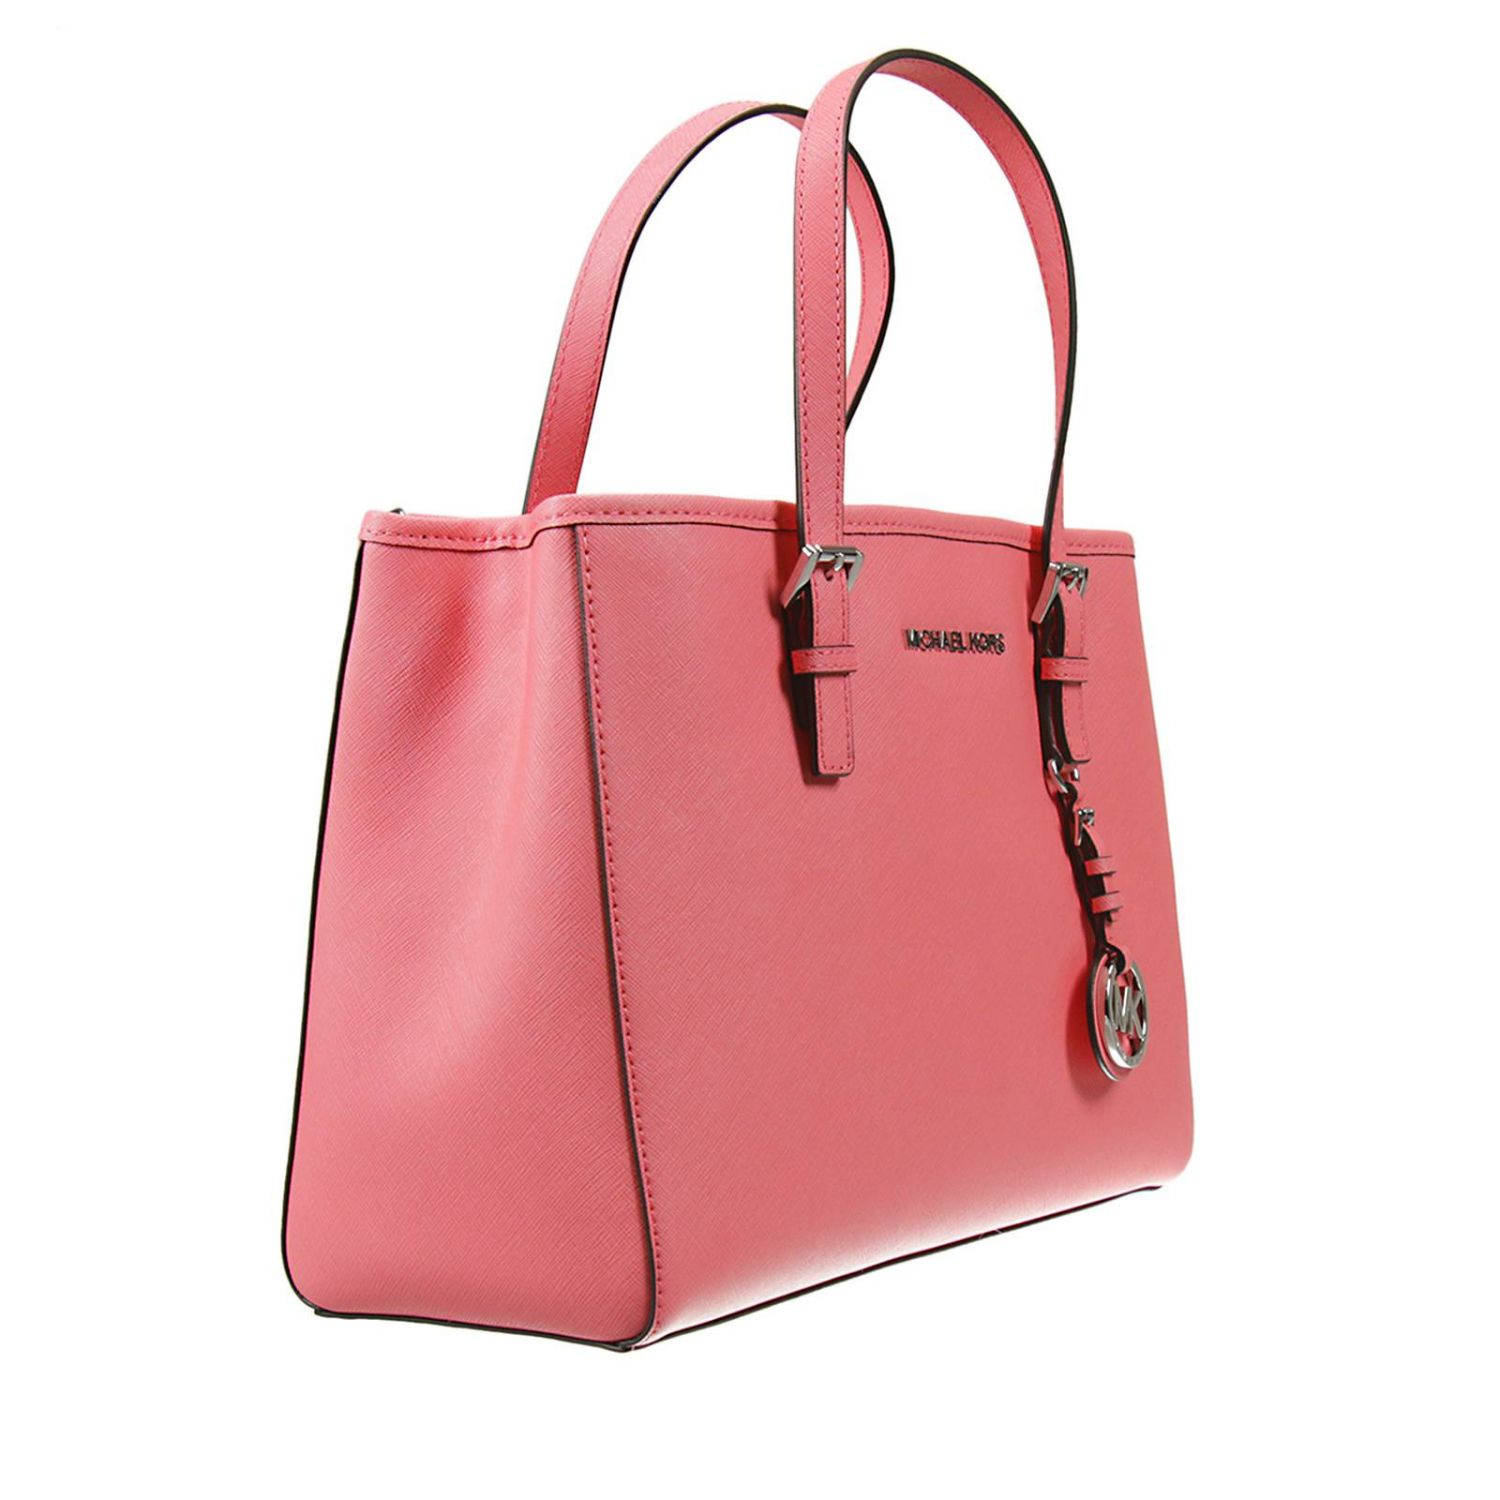 Dior Handbags At Neiman Marcus: Michael Kors Handbag Pink